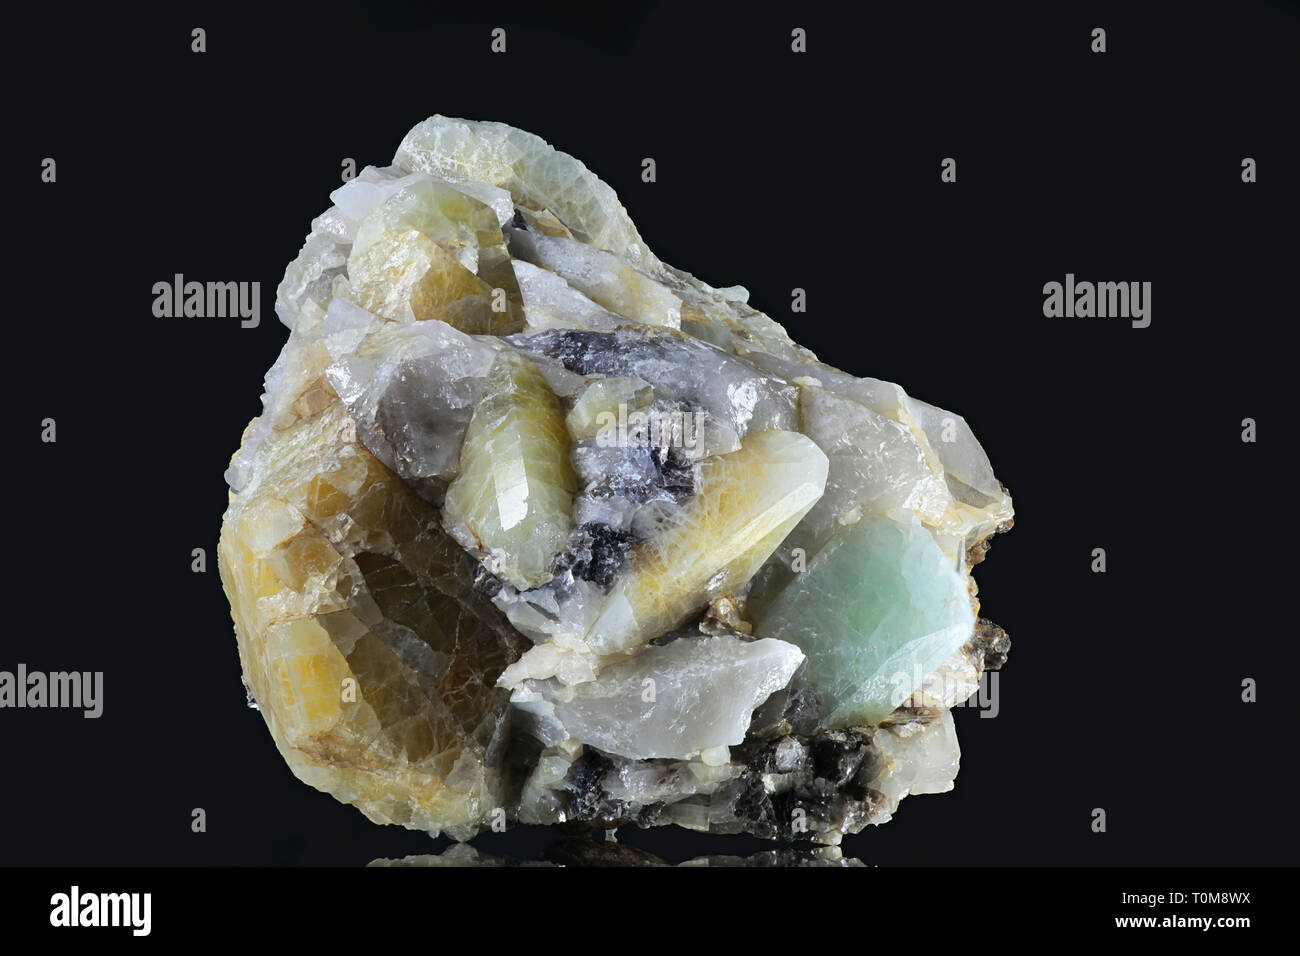 Crystals of topaz from Viitaniemi feldspar quarry in Finland Stock Photo